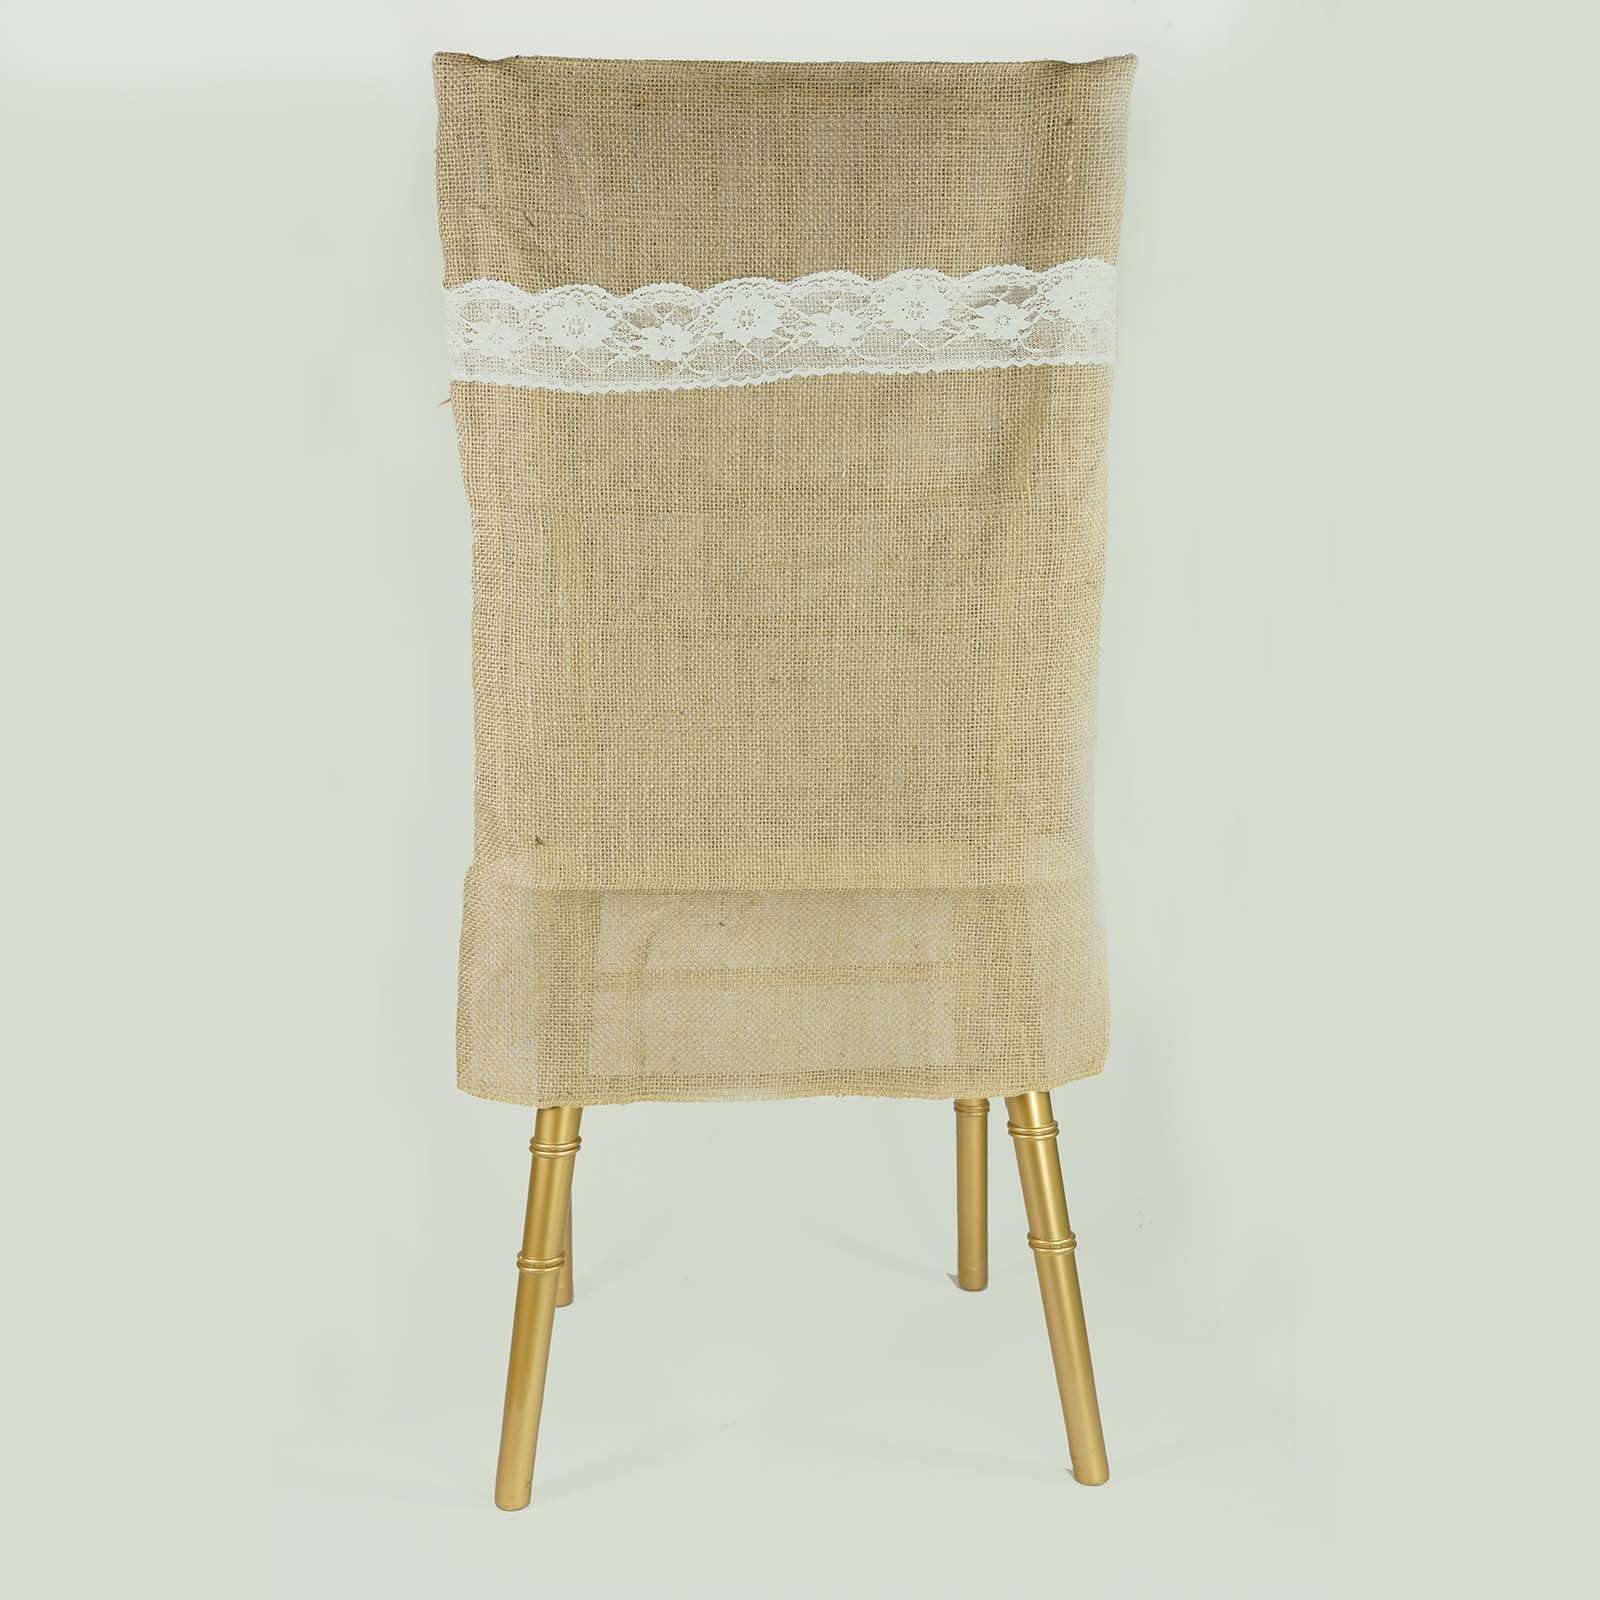 3ft Eco Friendly Natural Jute Burlap Chair Slipcover